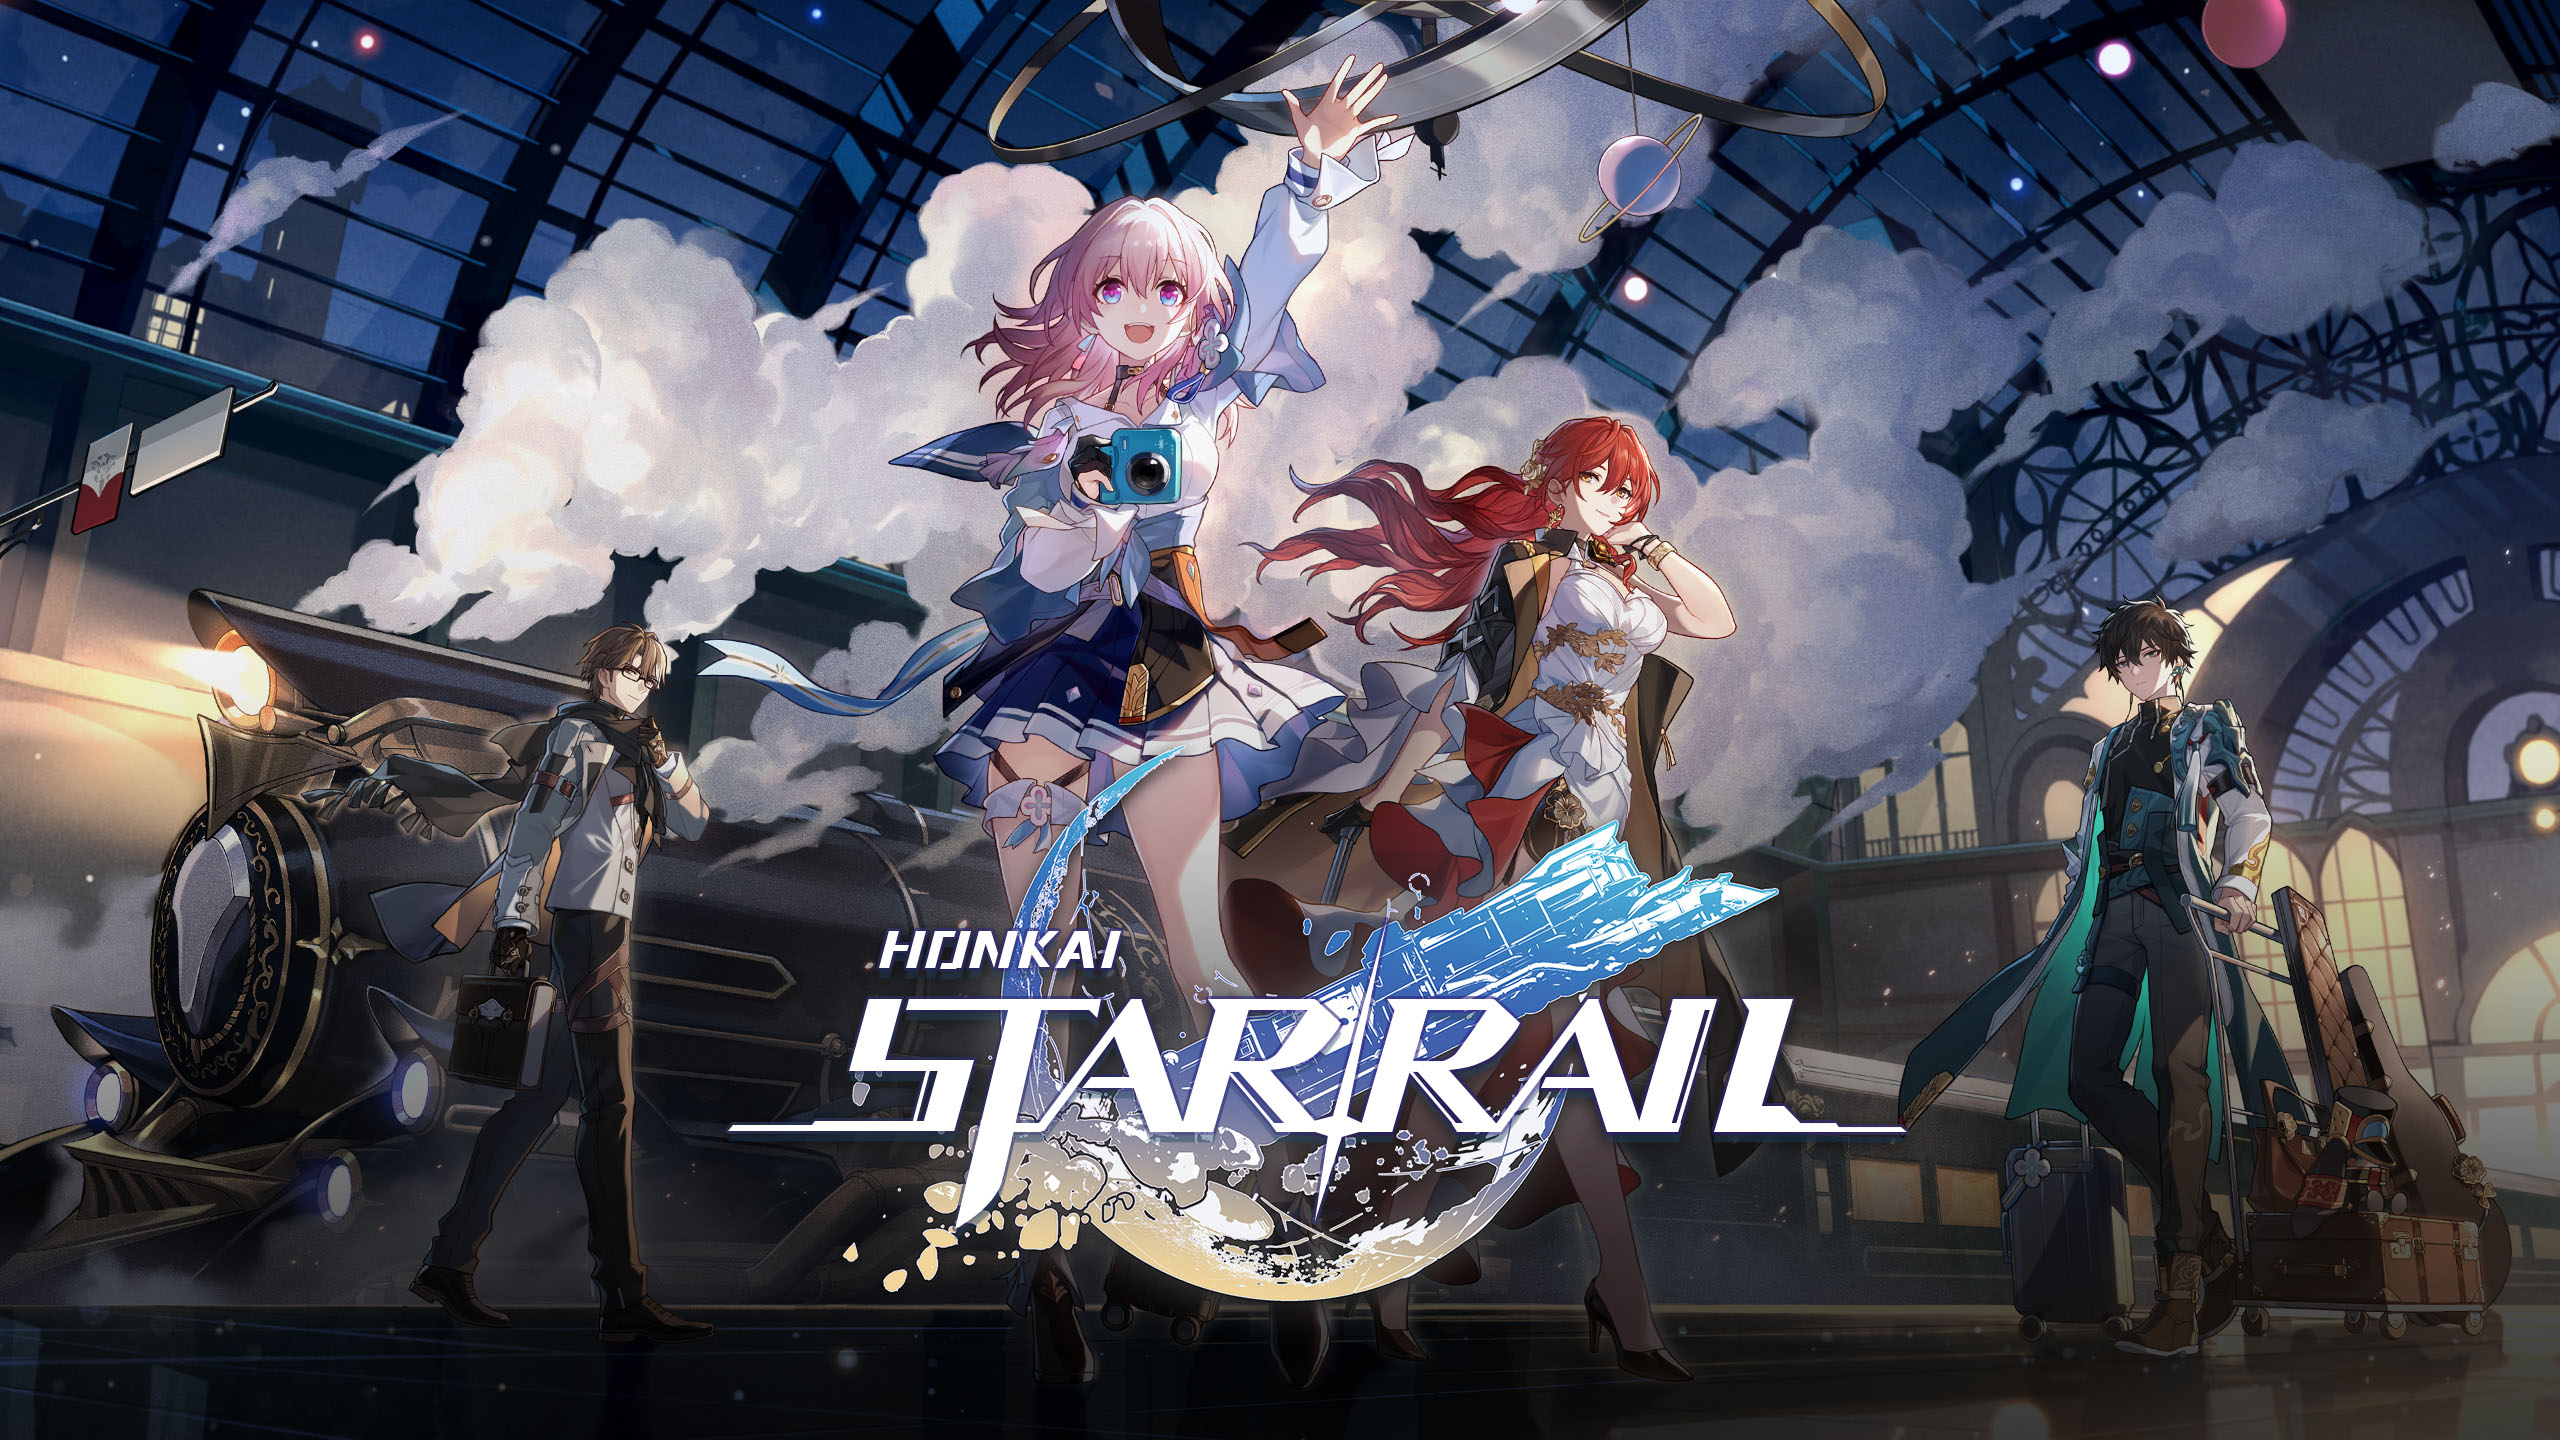 Star Rail – New Character Imbibitor Lunae Revealed